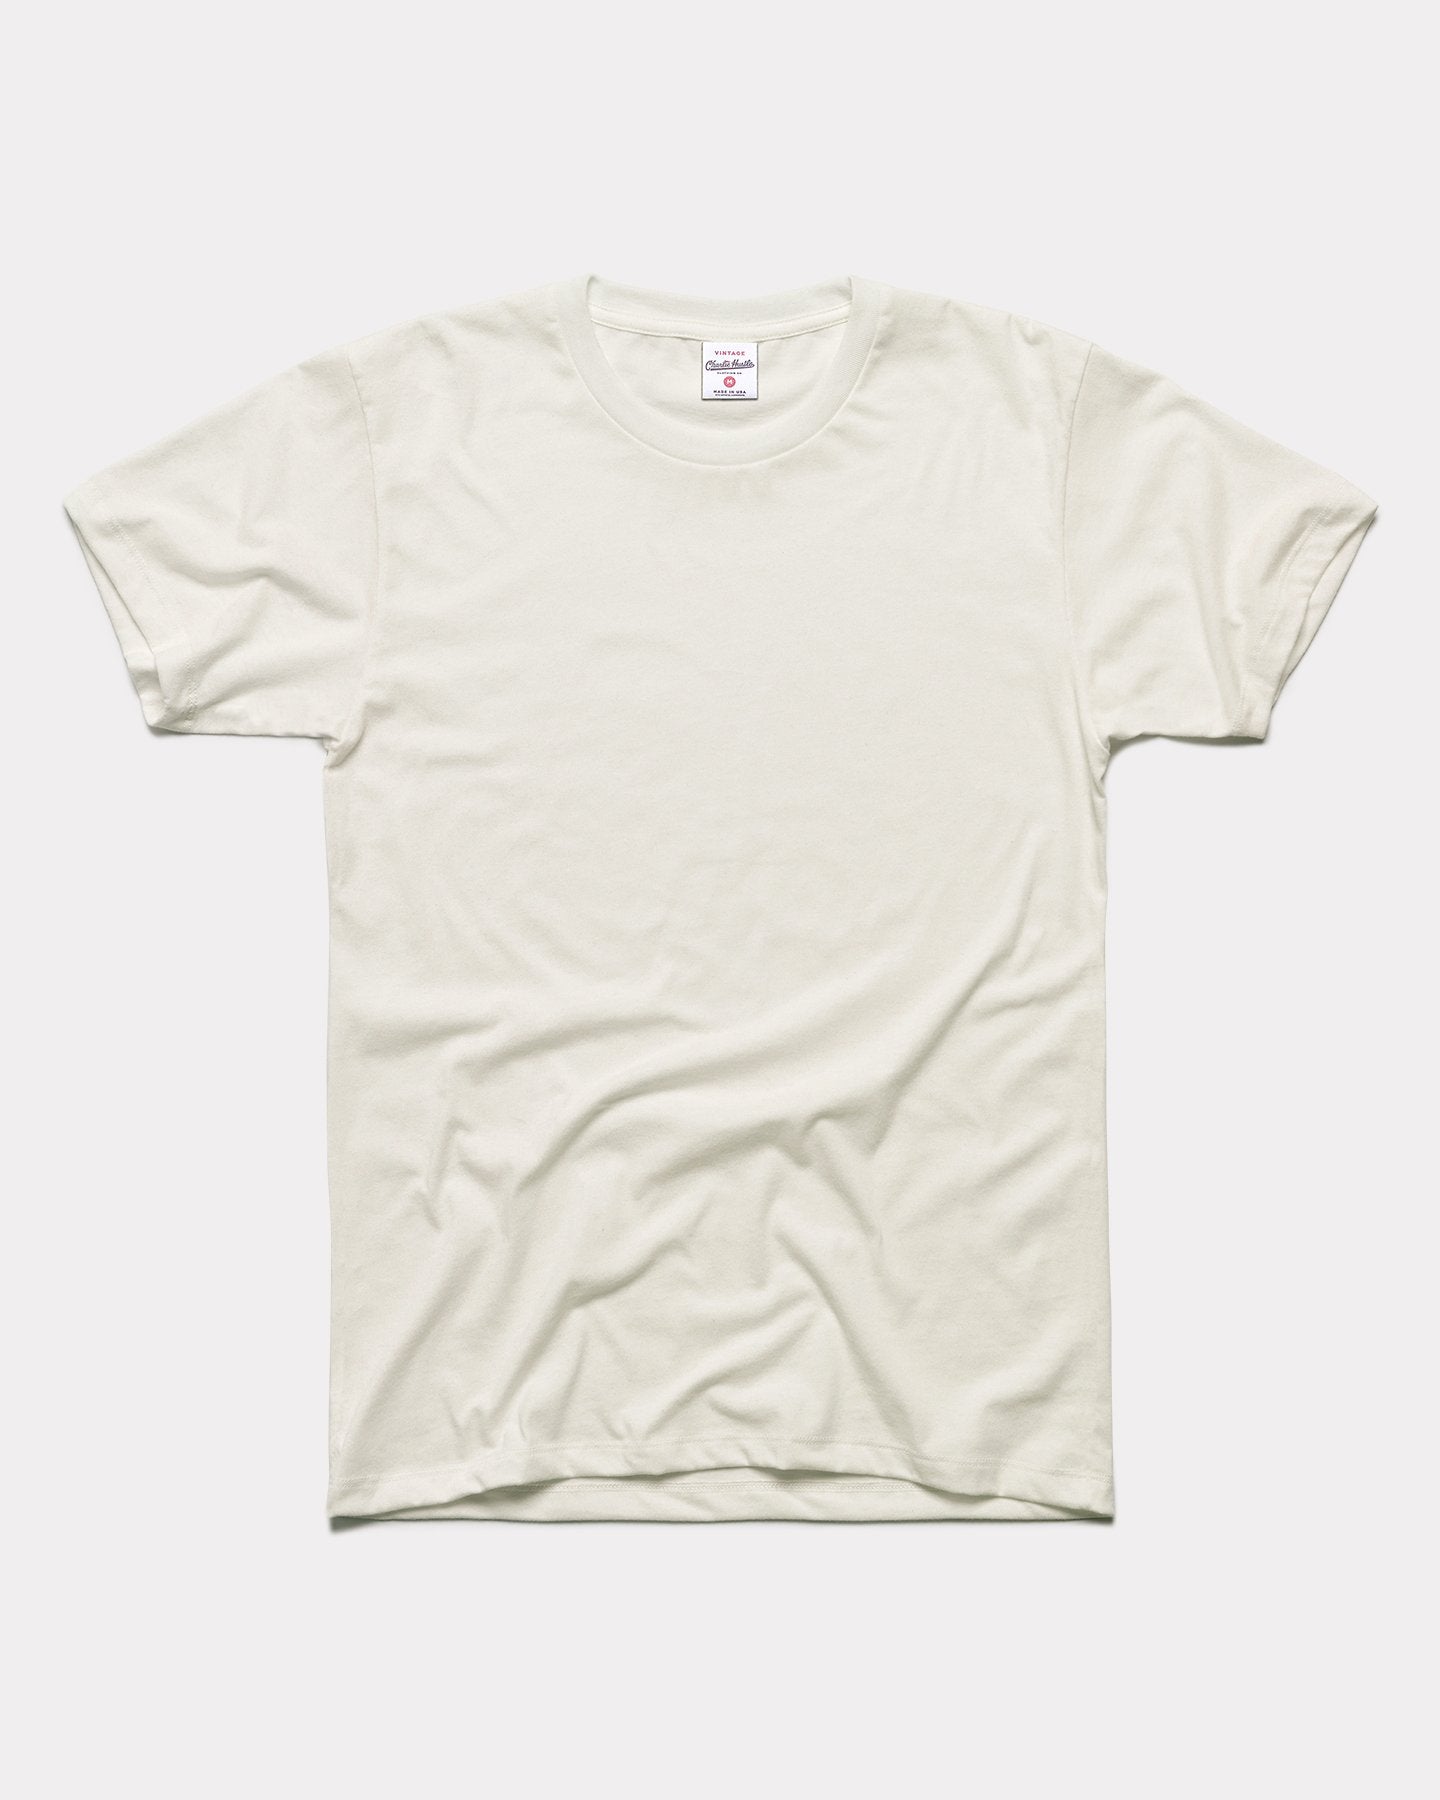 QWERTYUIOPASDFGHJKLZXCVBNM | Essential T-Shirt